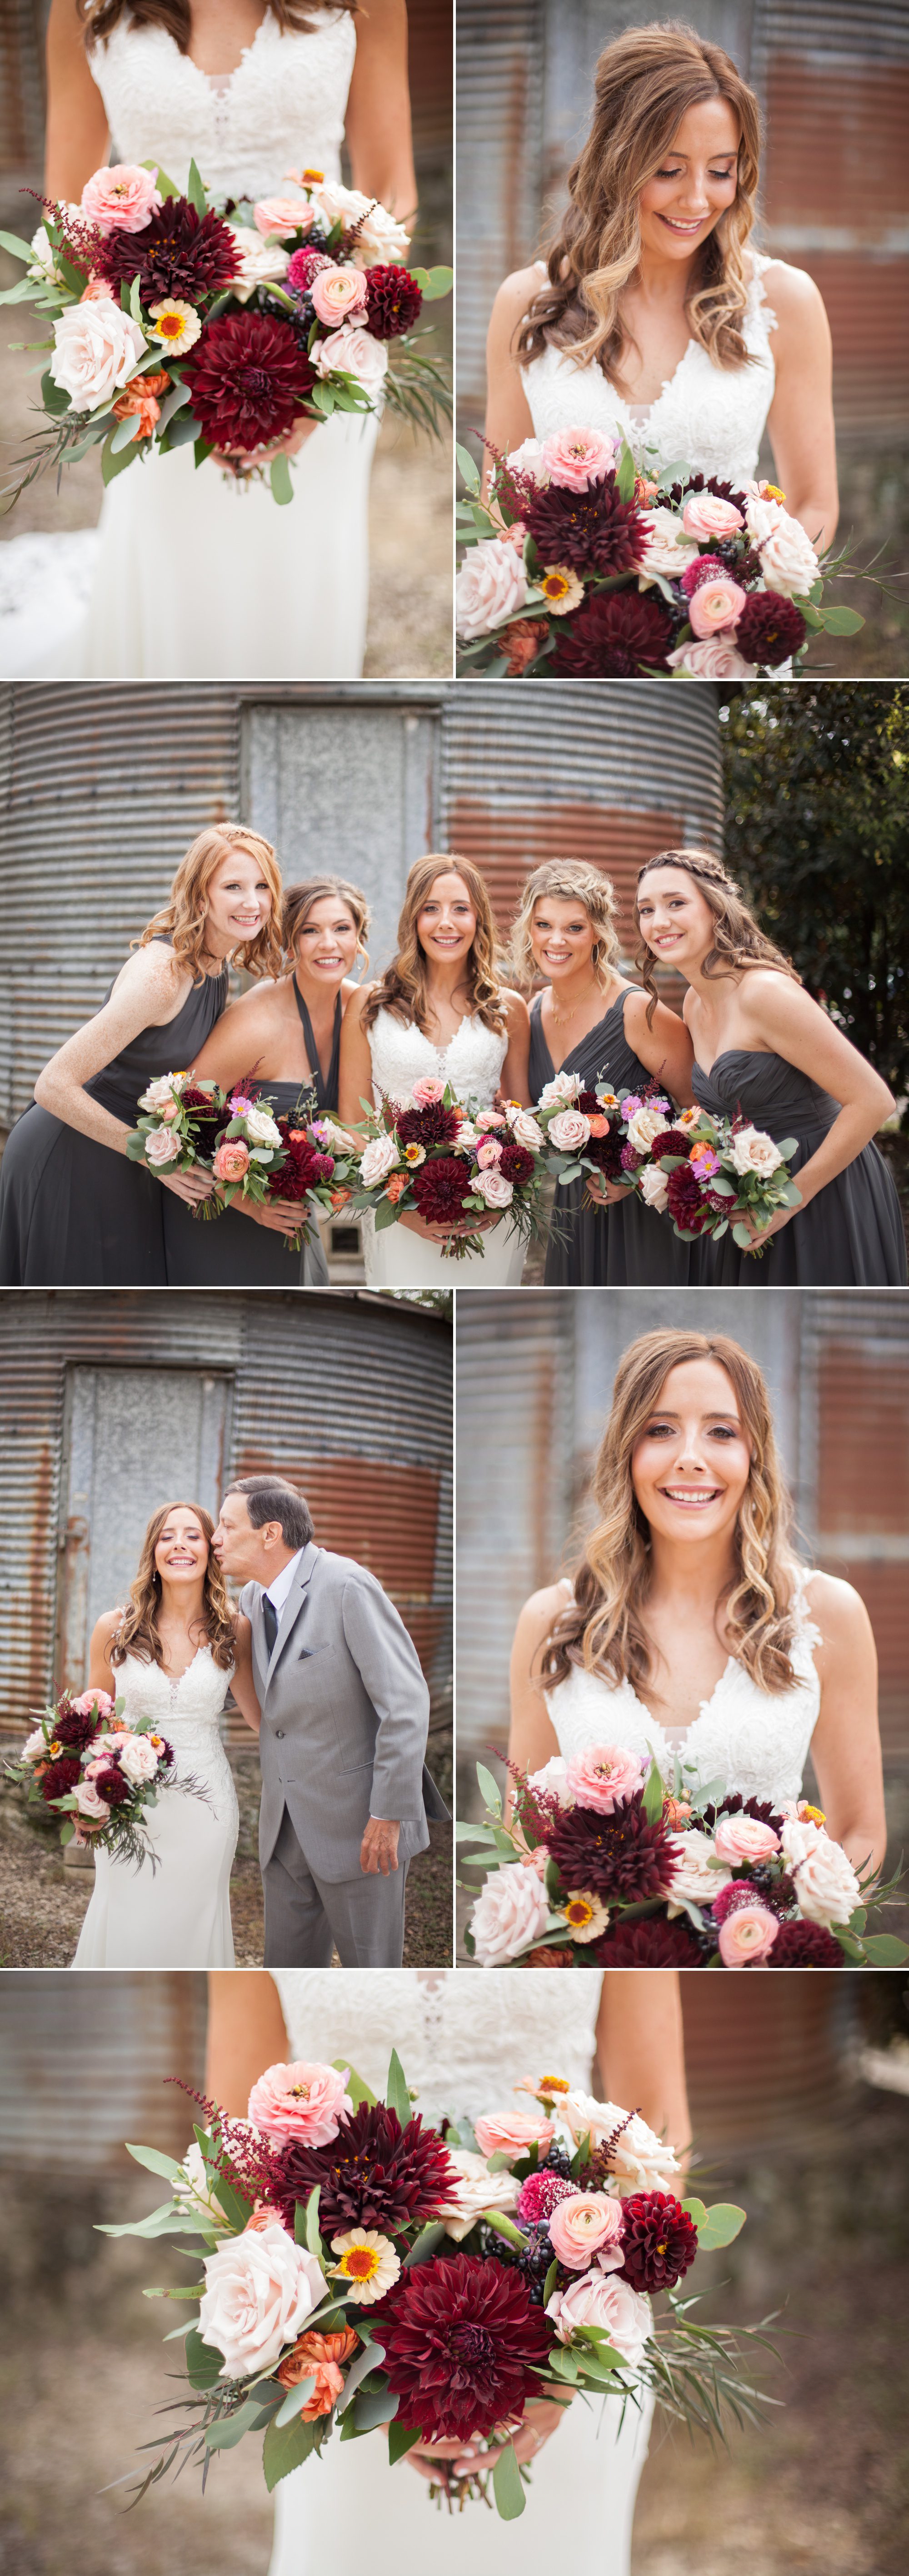 Beautiful bride and bridesmaid photos before wedding ceremony photography at Green Door Gourmet in Nashville, TN